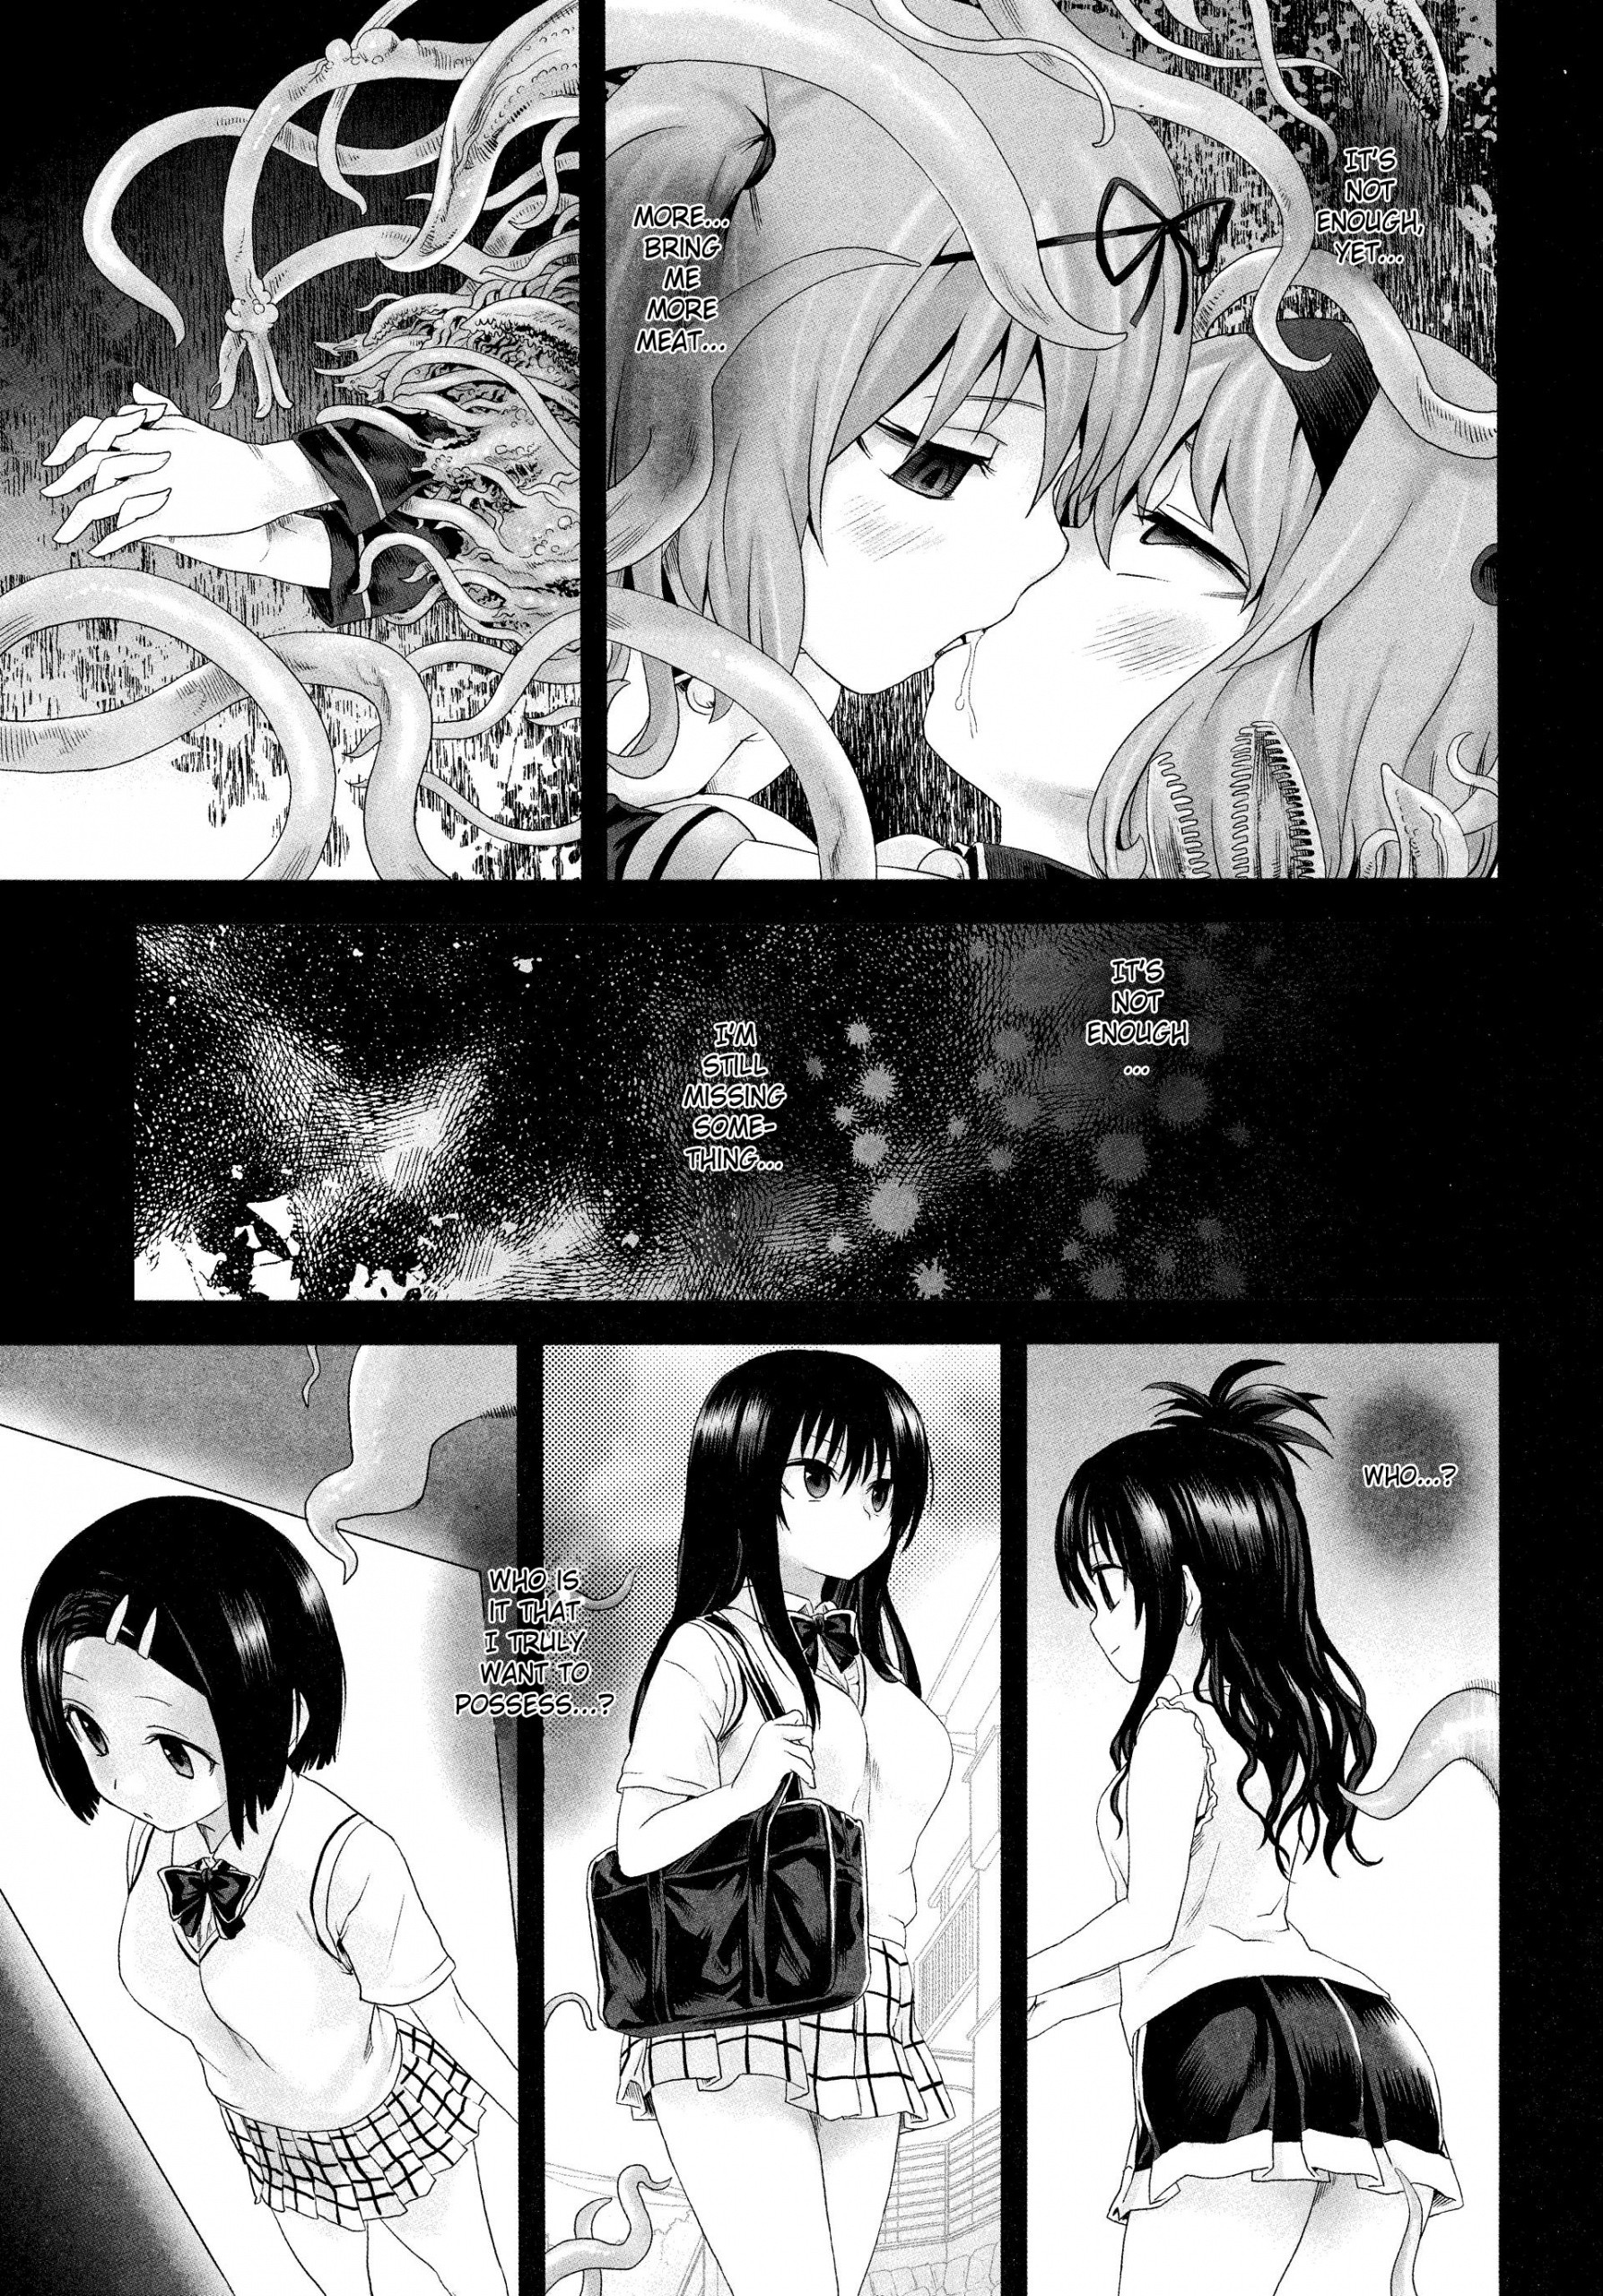 Victim Girls 8 - Venus Trap hentai manga picture 20